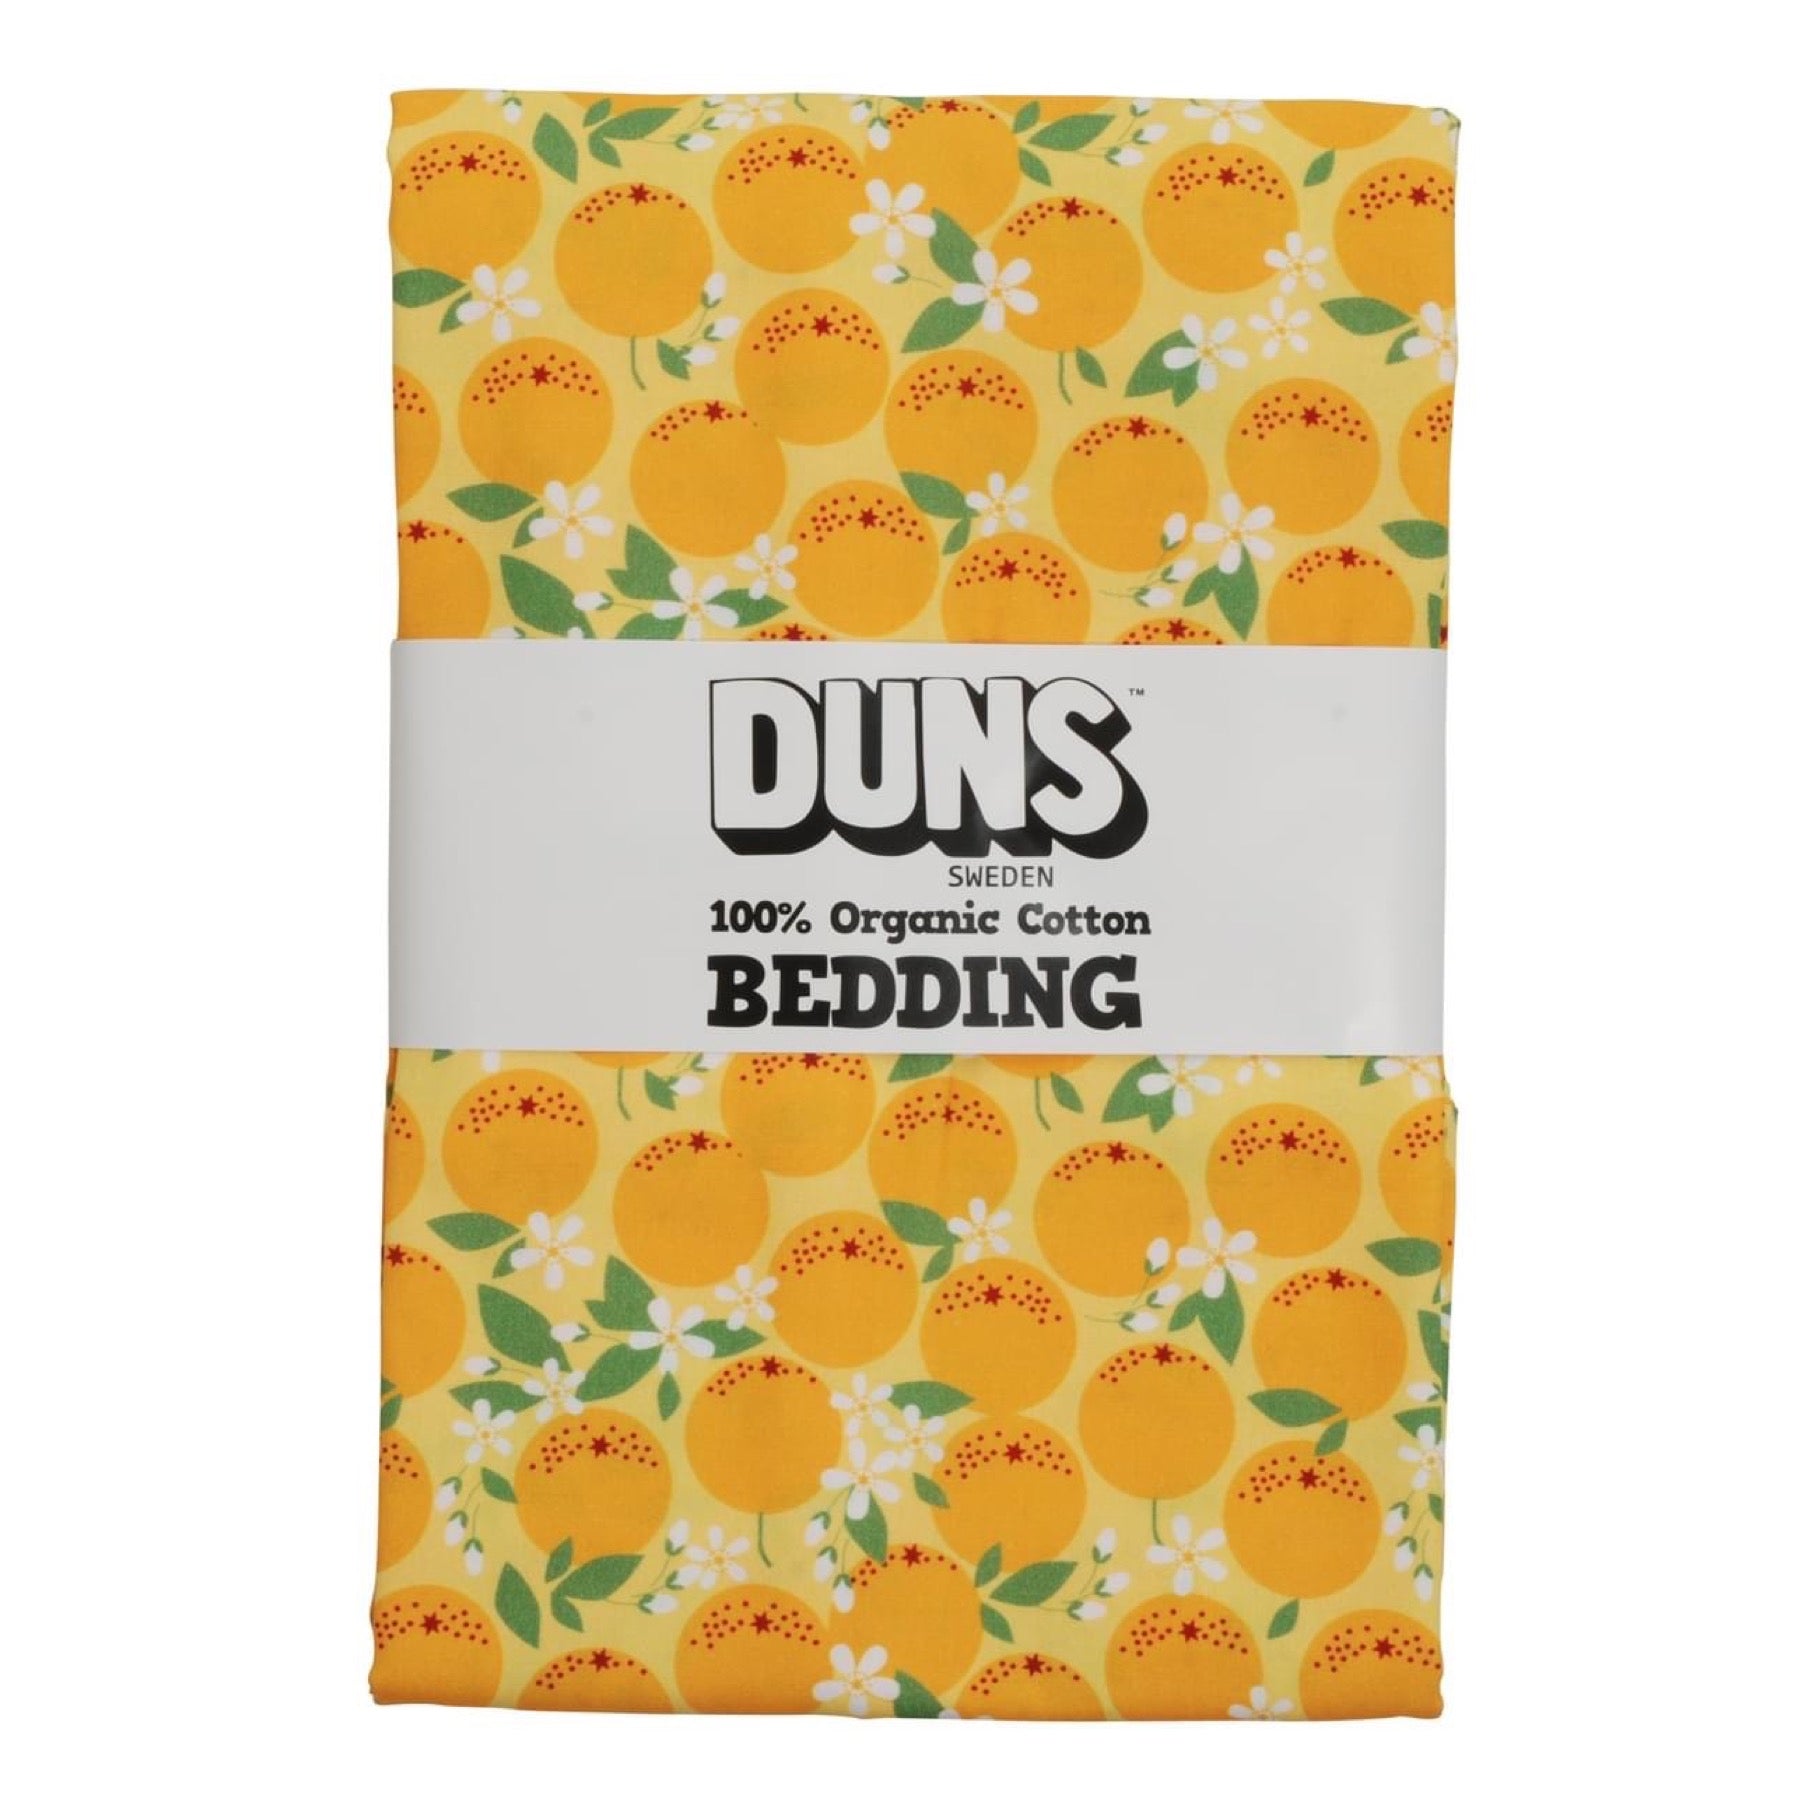 DUNS Sweden Bedding Oranges Yellow